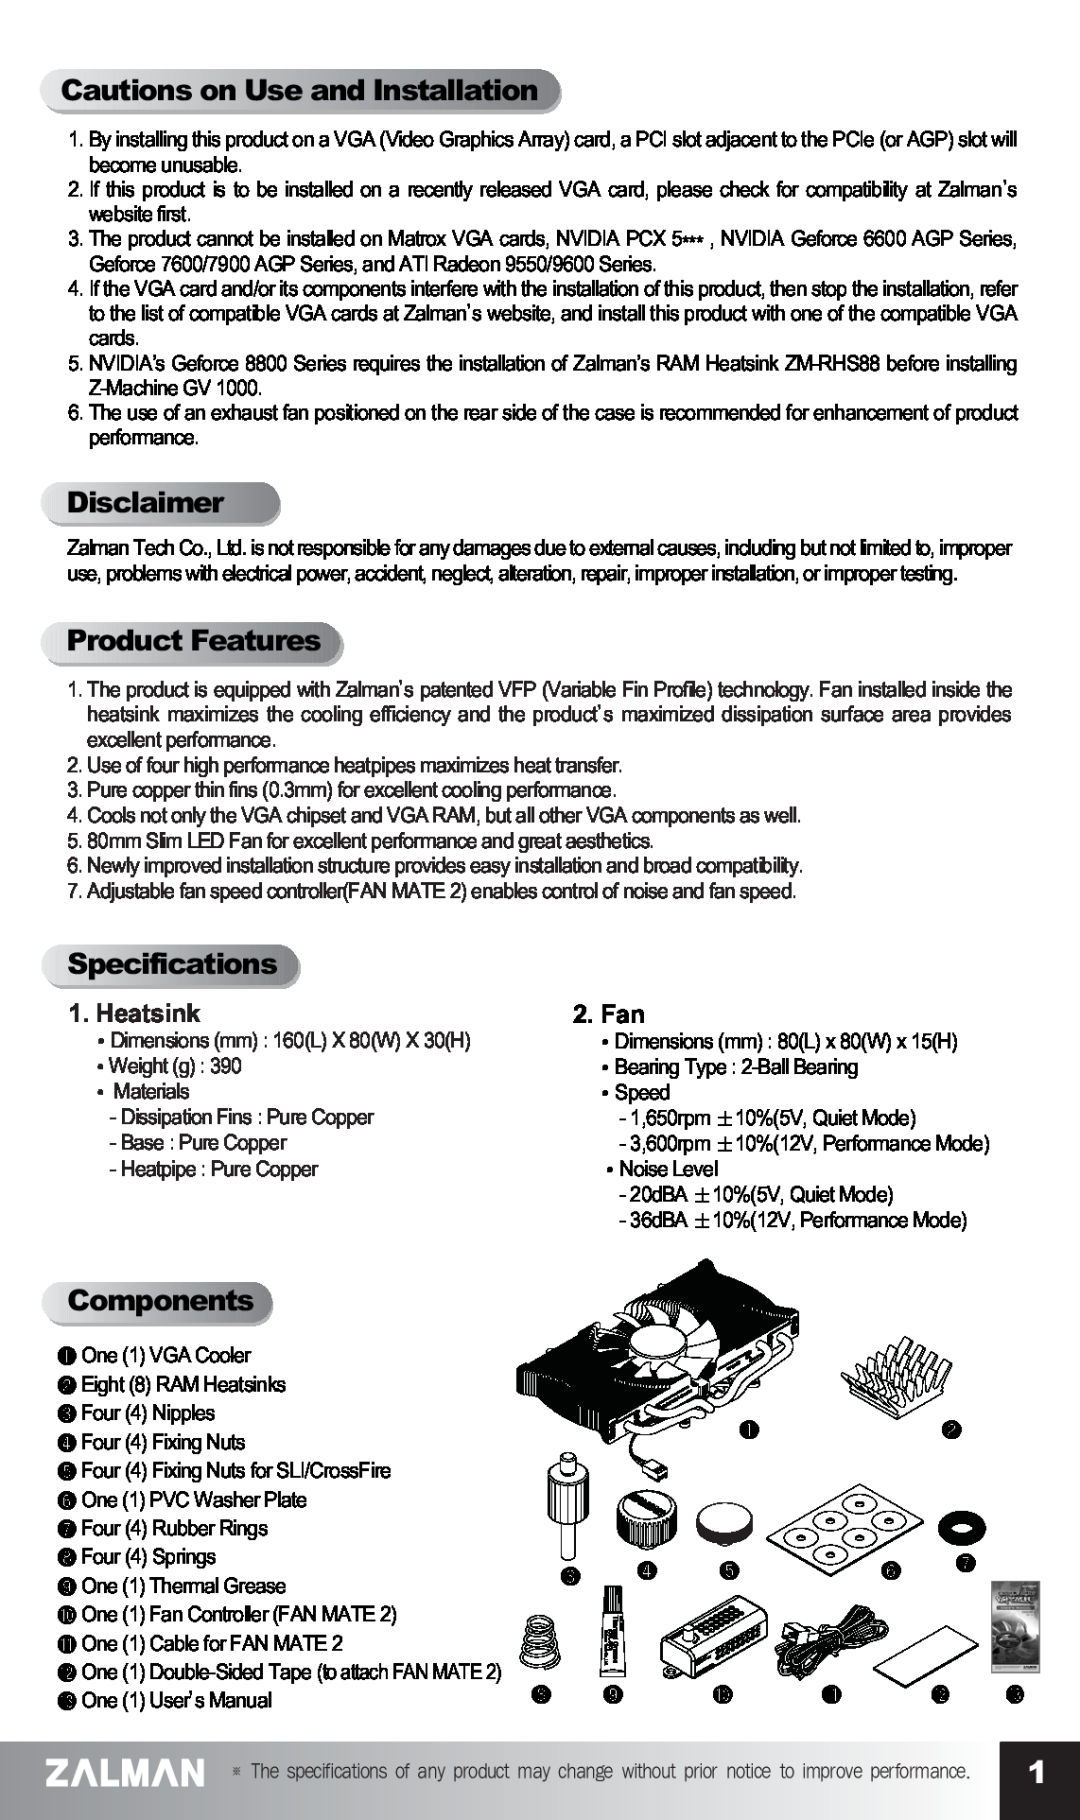 ZALMAN GV1000 manual CautionsonUseandInstallation, Disclaimer, ProductFeatures, Specifications, Components, Heatsink, Fan 